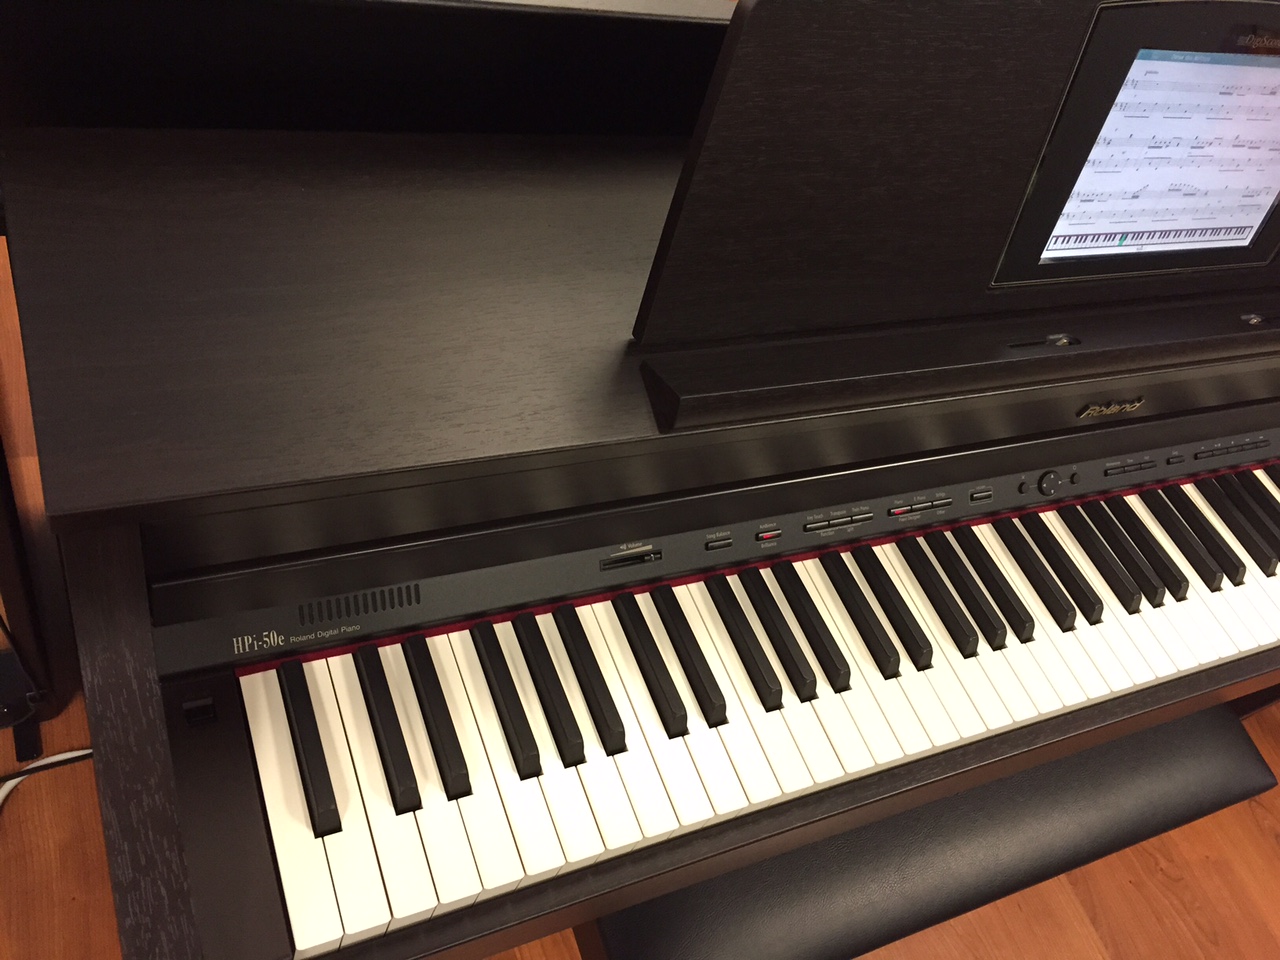 Roland HPi-50e Interactive Digital Piano (USED) - Capital Music Center